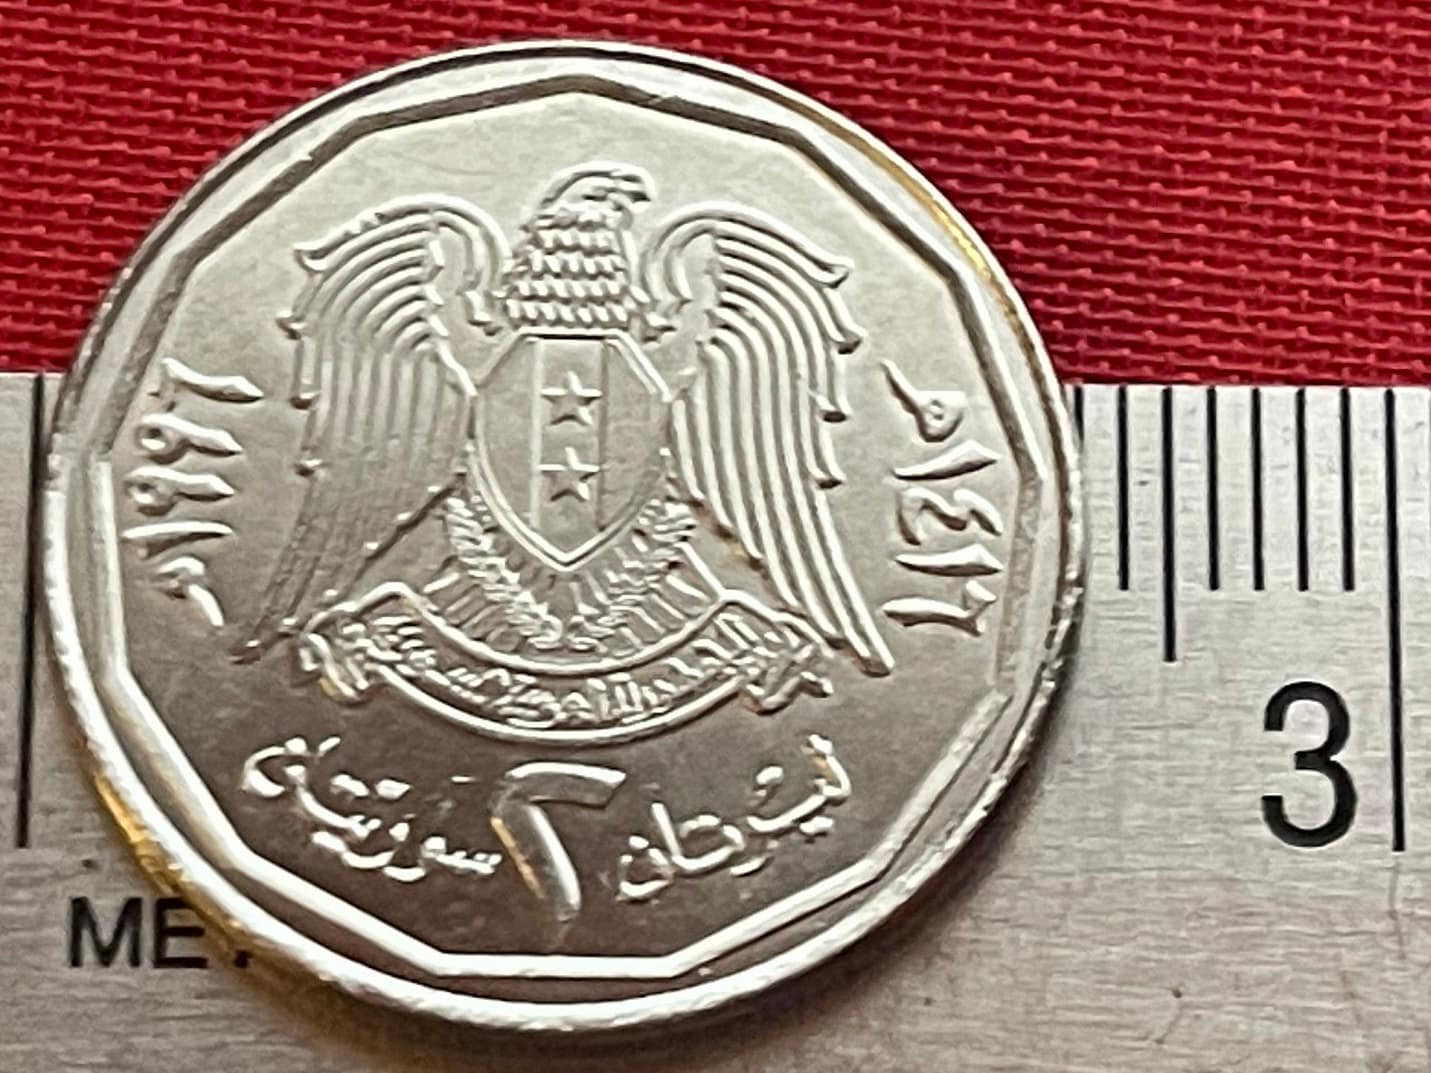 Hawk of Quraish & Roman Gladiator Theatre at Bosra 2 Lira Syria Authentic Coin Charm for Jewelry and Craft Making (Falcon)